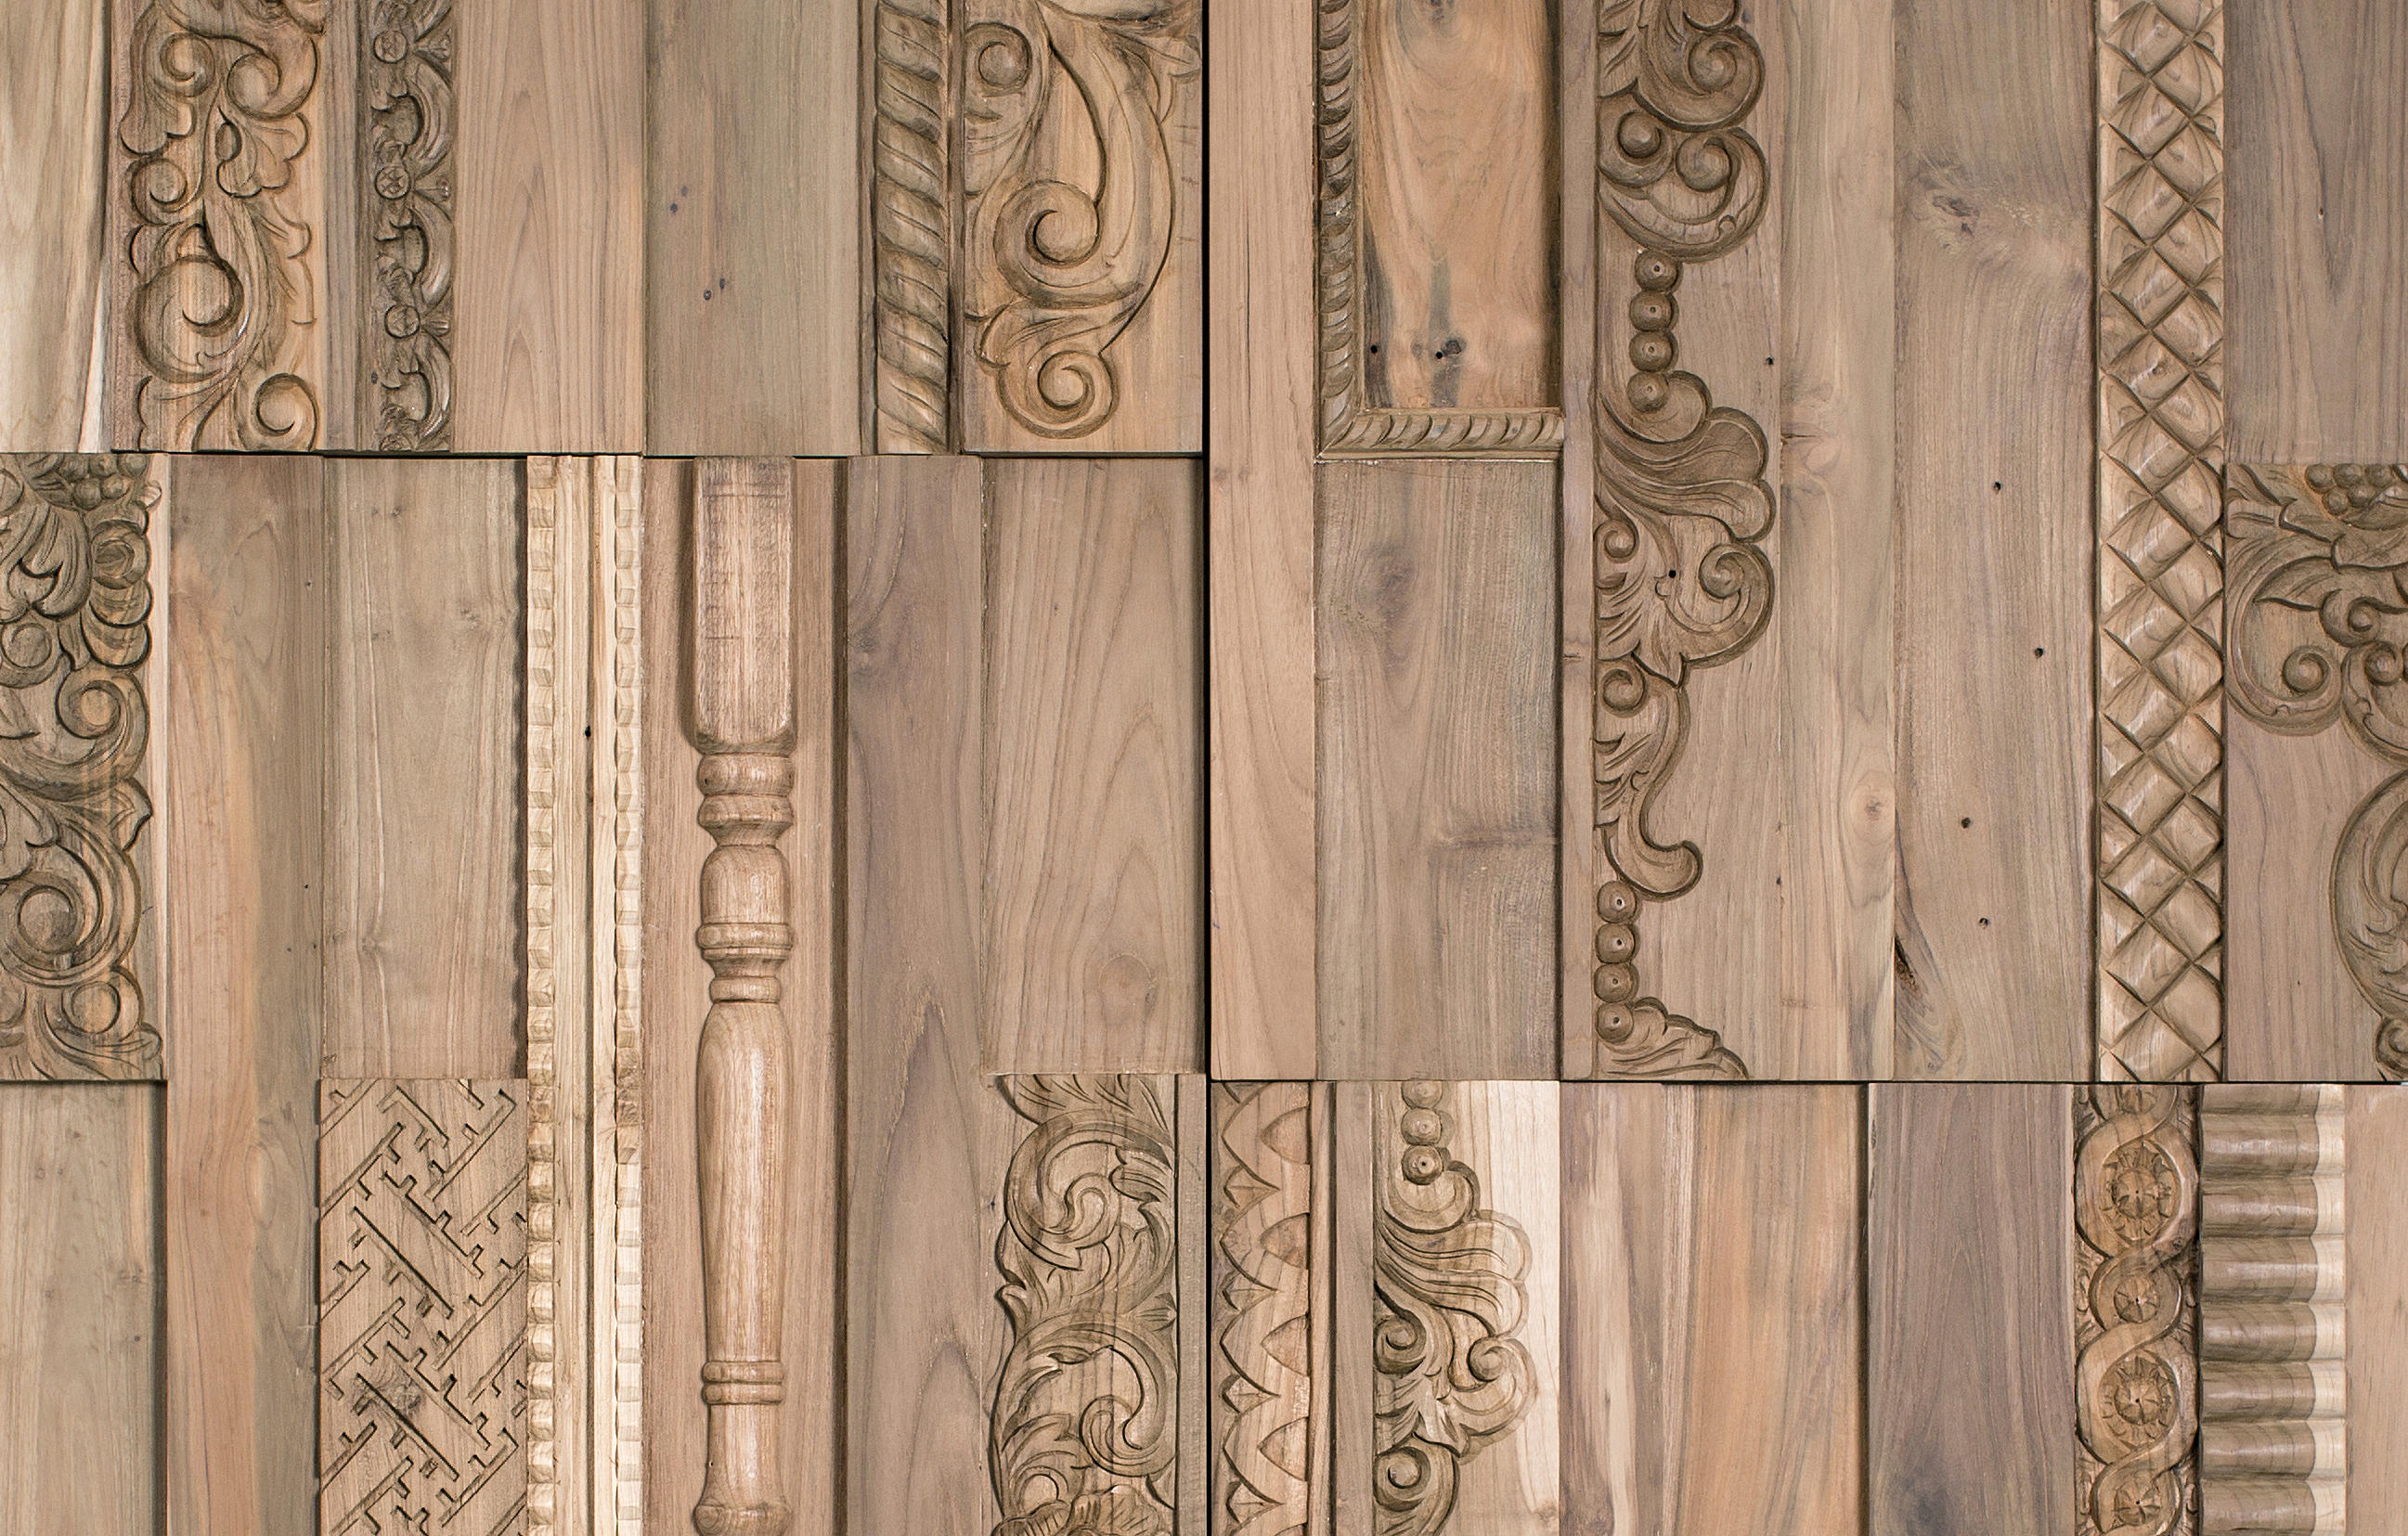 Phoenix Wood Panels From Wonderwall Studios Architonic